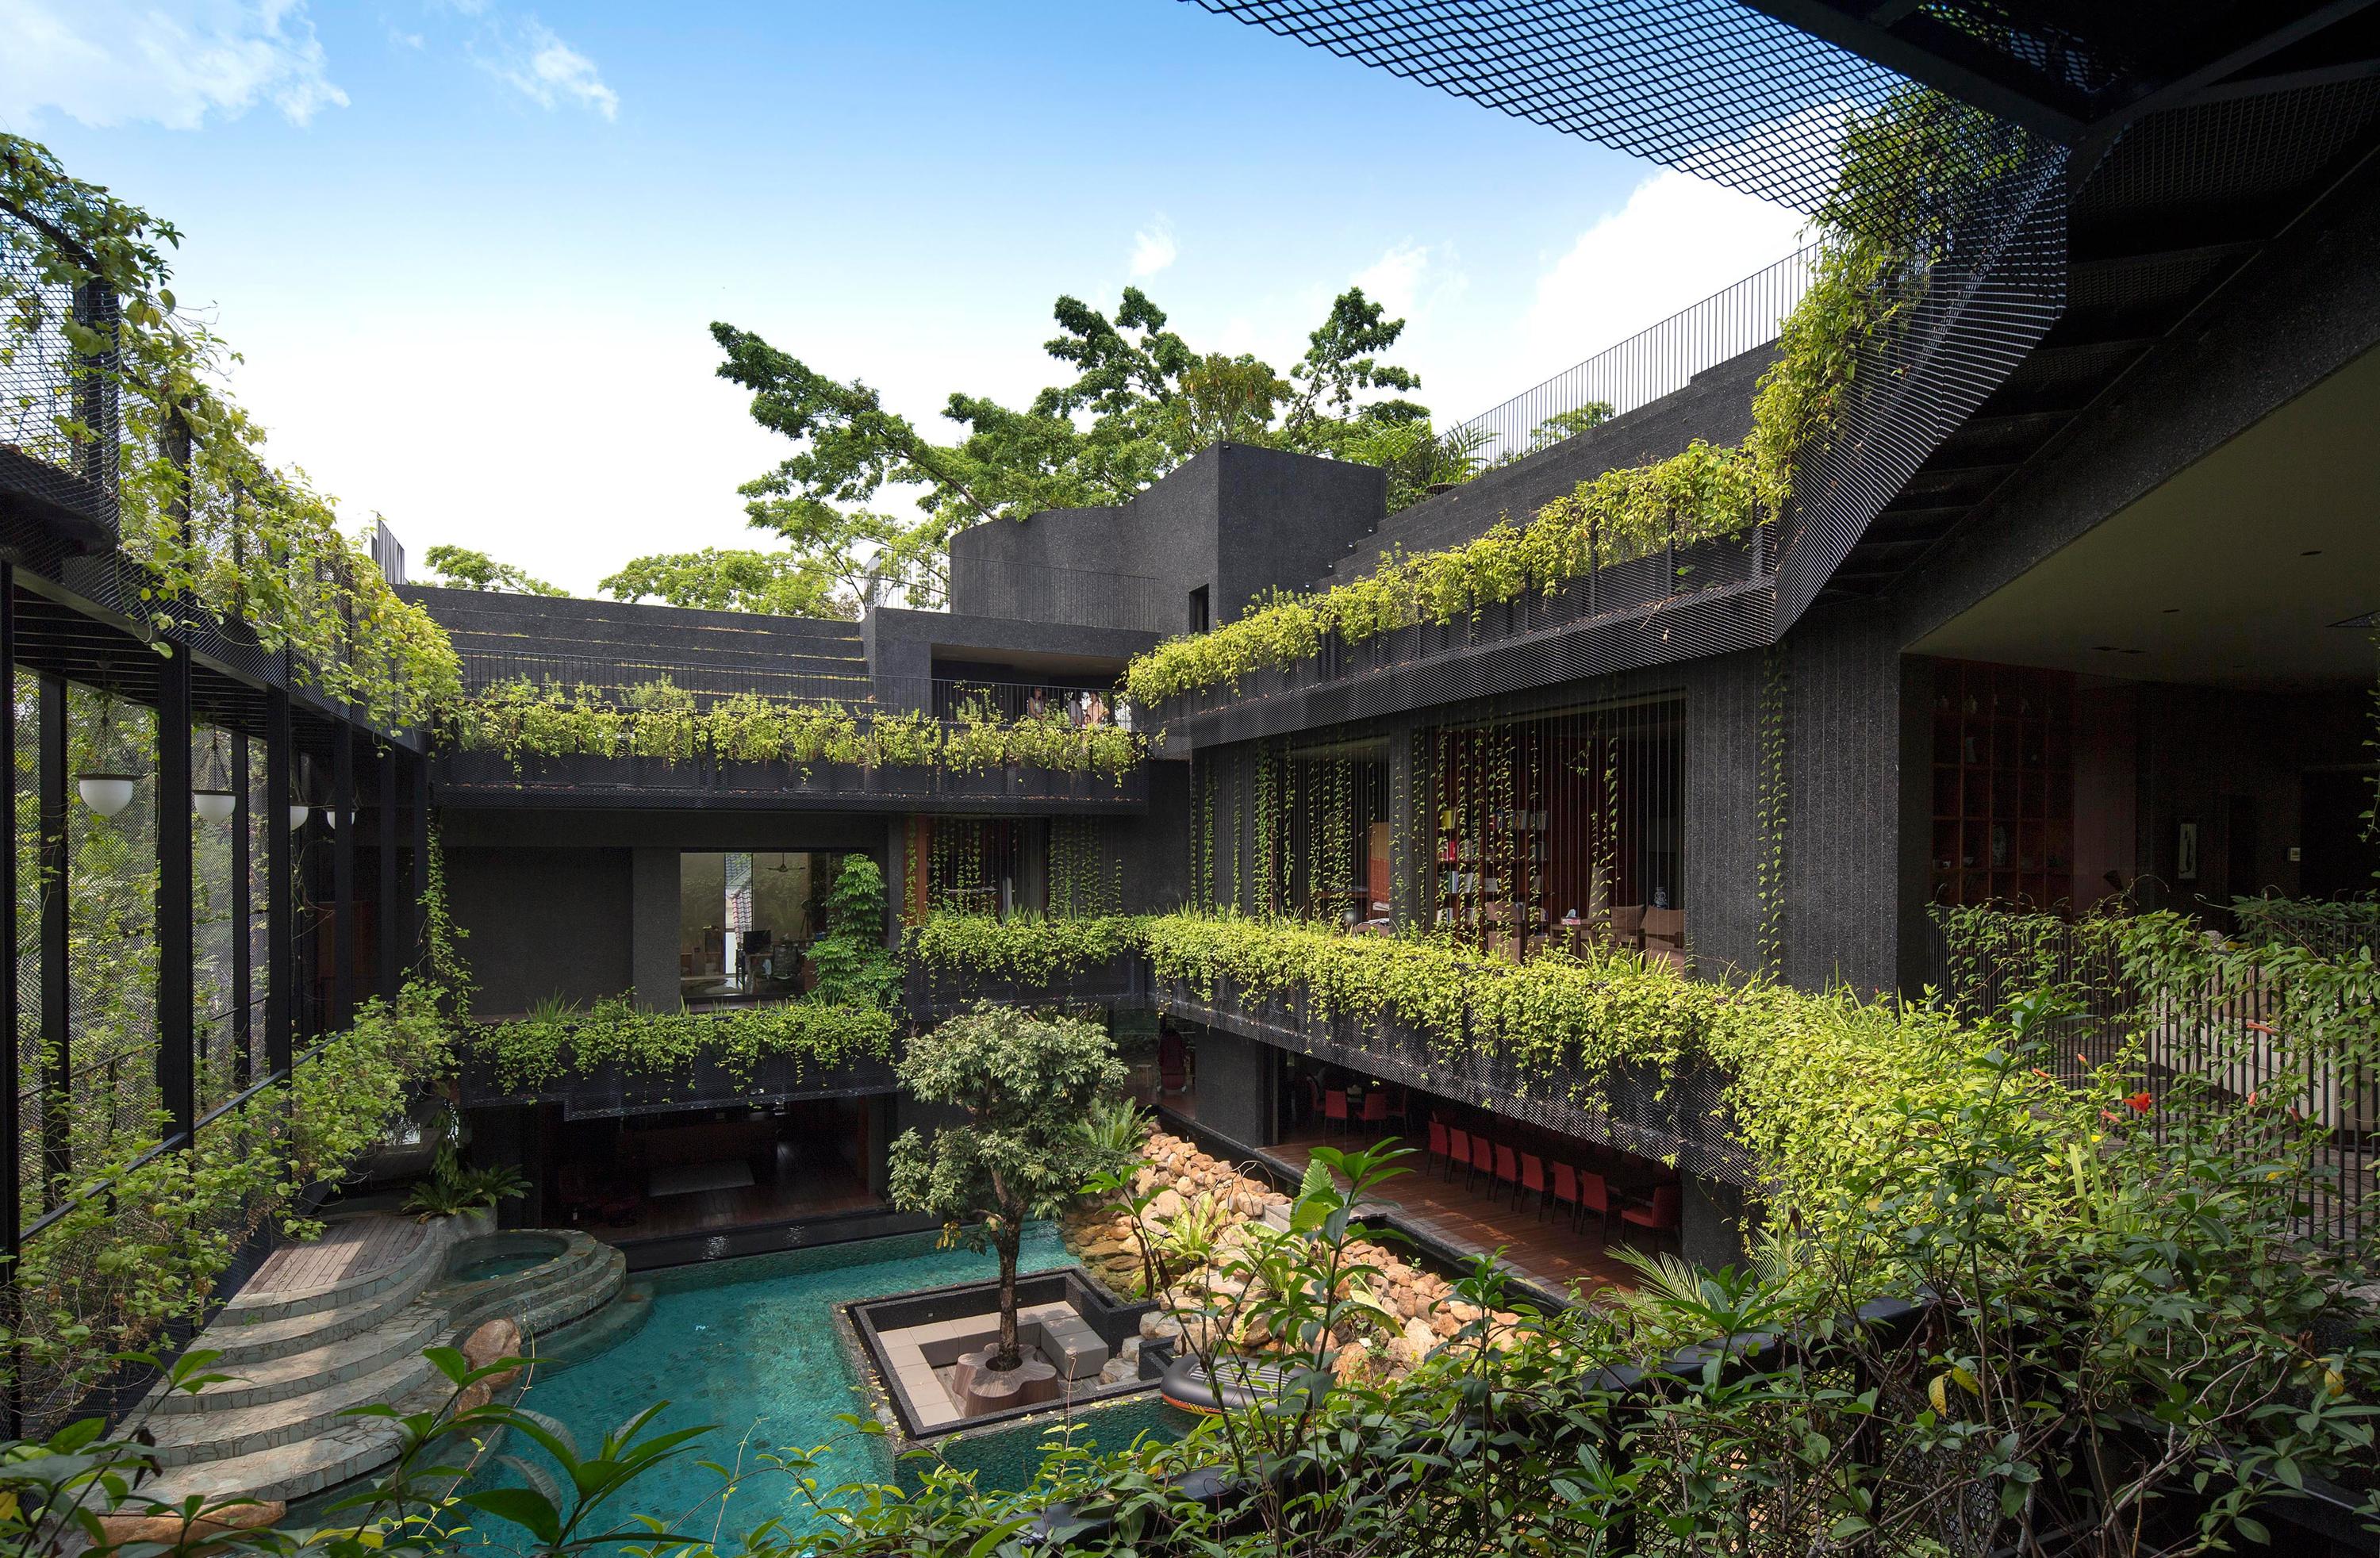 Дом с двором внутри. Meera Sky Garden House, Сингапур. Корнуолл Гарденс Хаус. Сингапур оранжерея архитектура. Зеленая крыша Сингапур шоуруф.